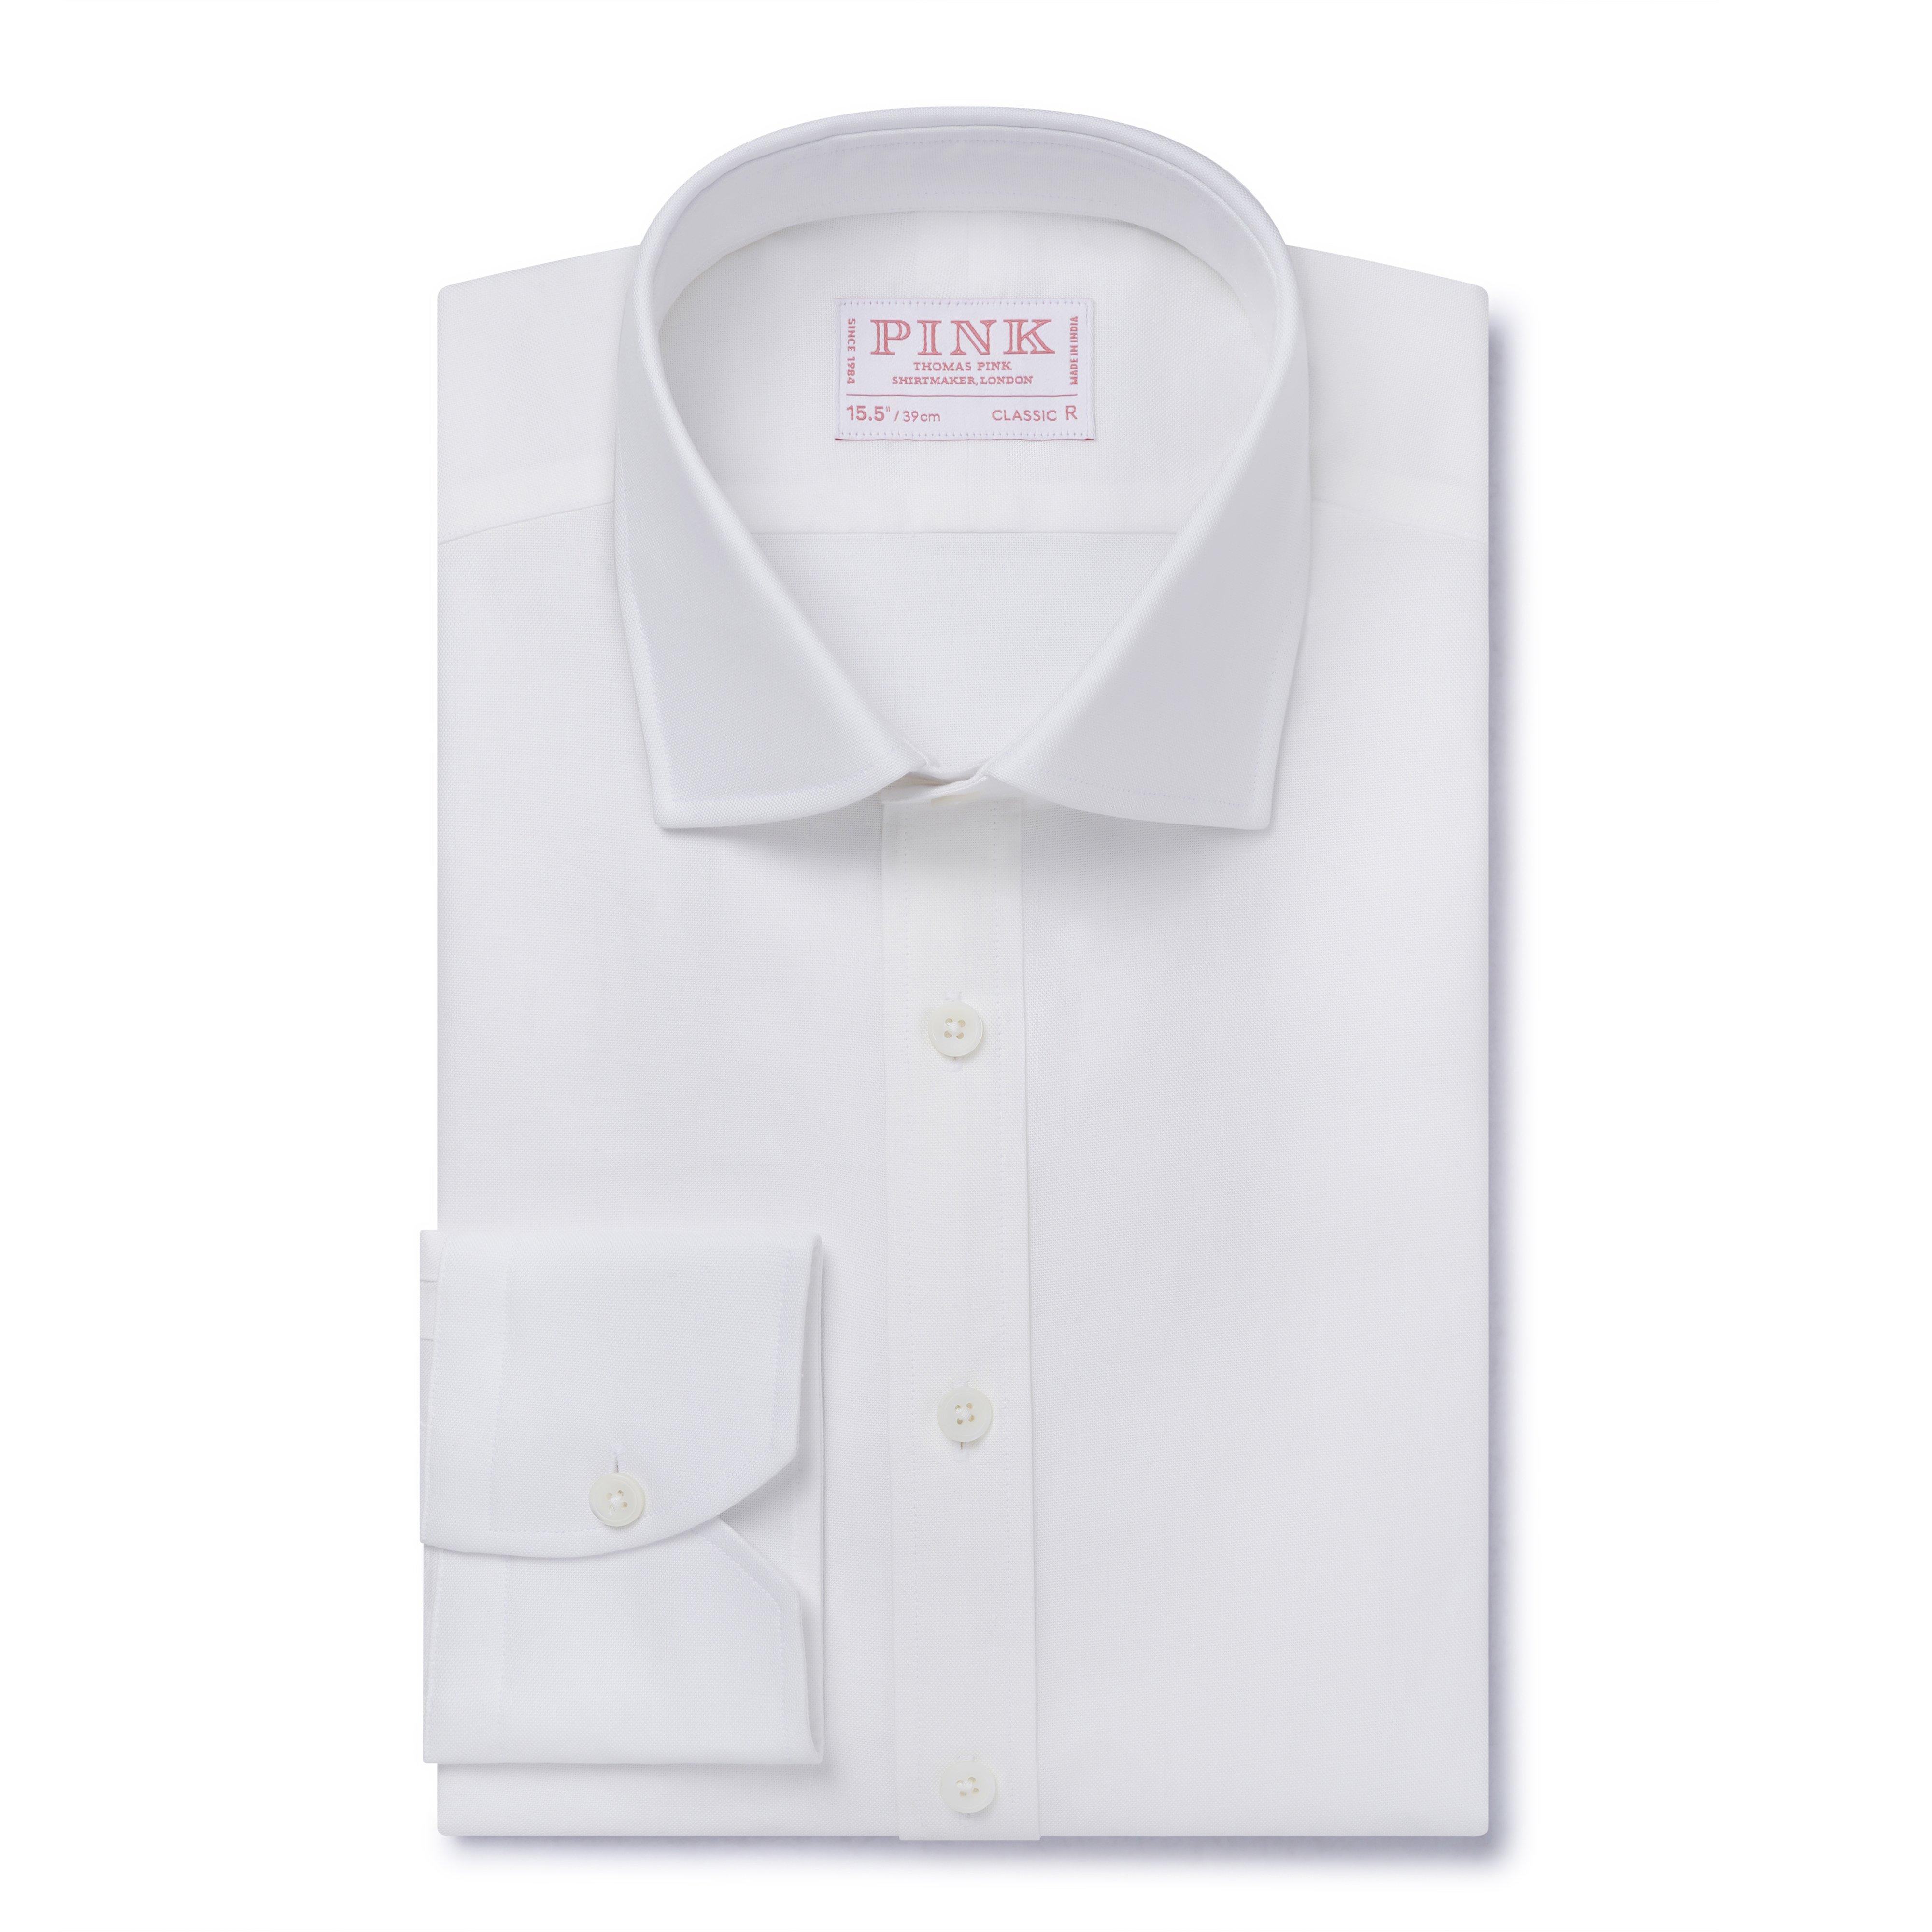 The World's Best White Shirts - Thomas Pink